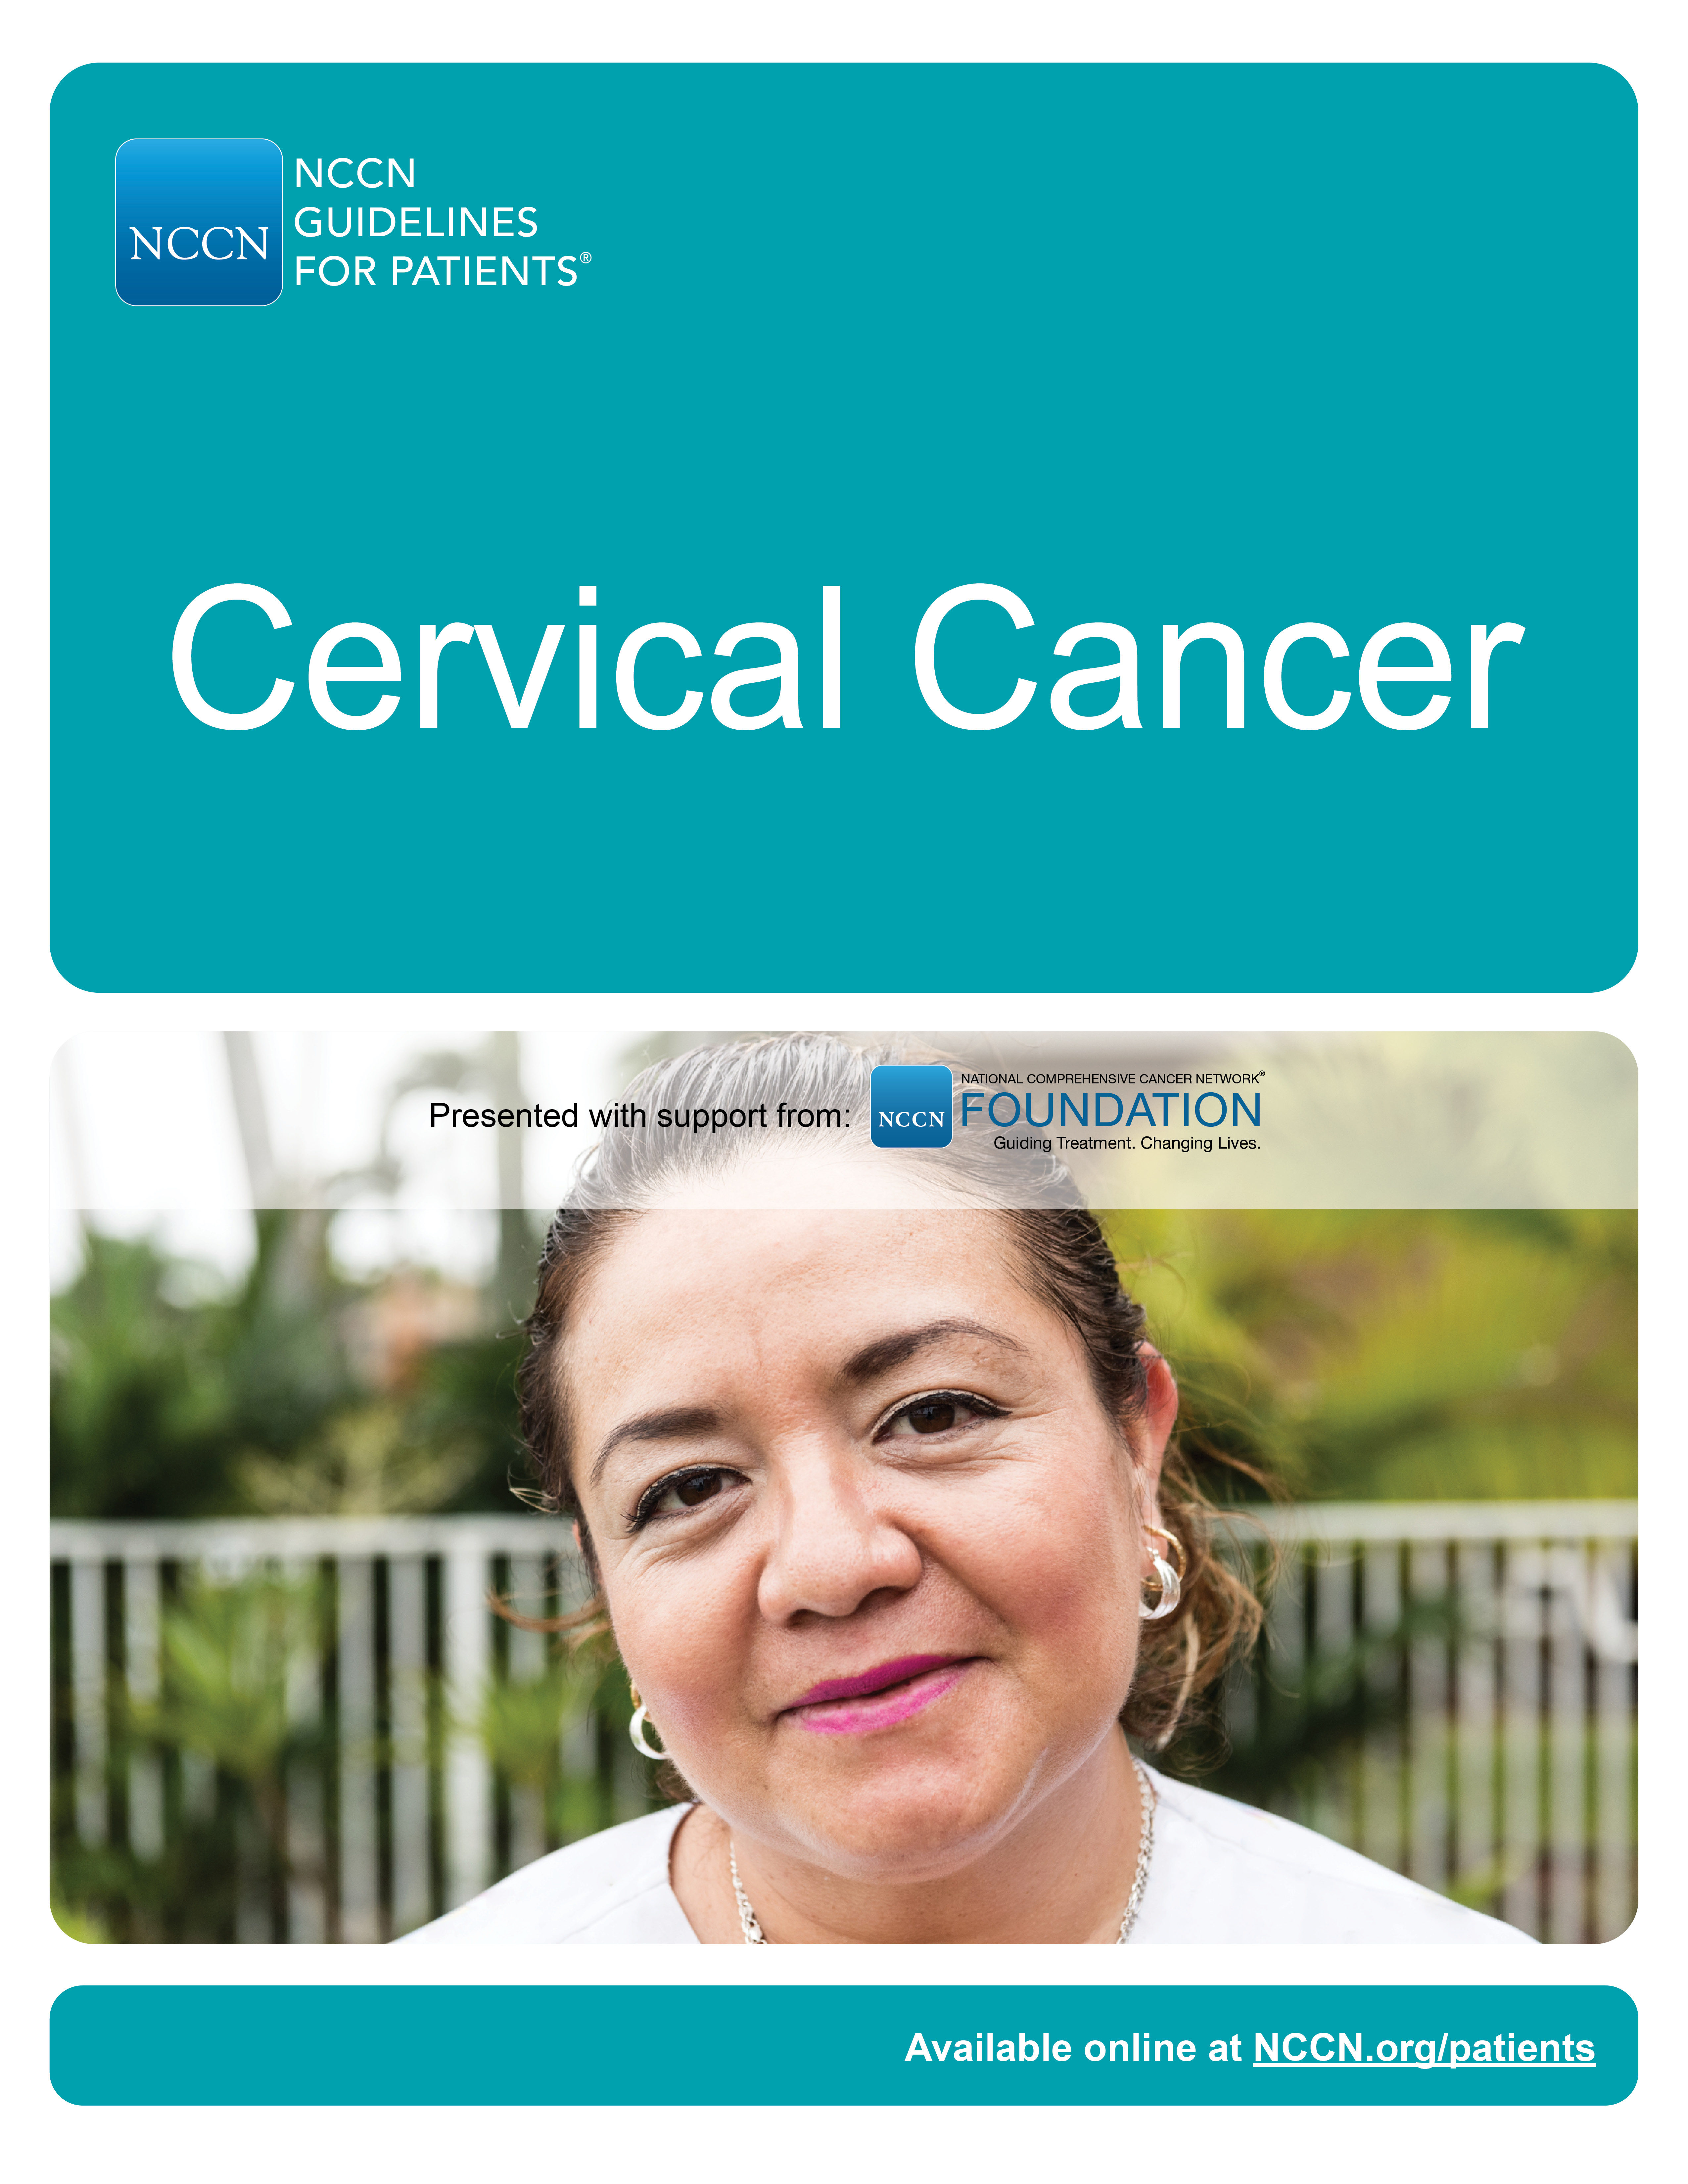 NCCN Guidelines for Patients: Cervical Cancer